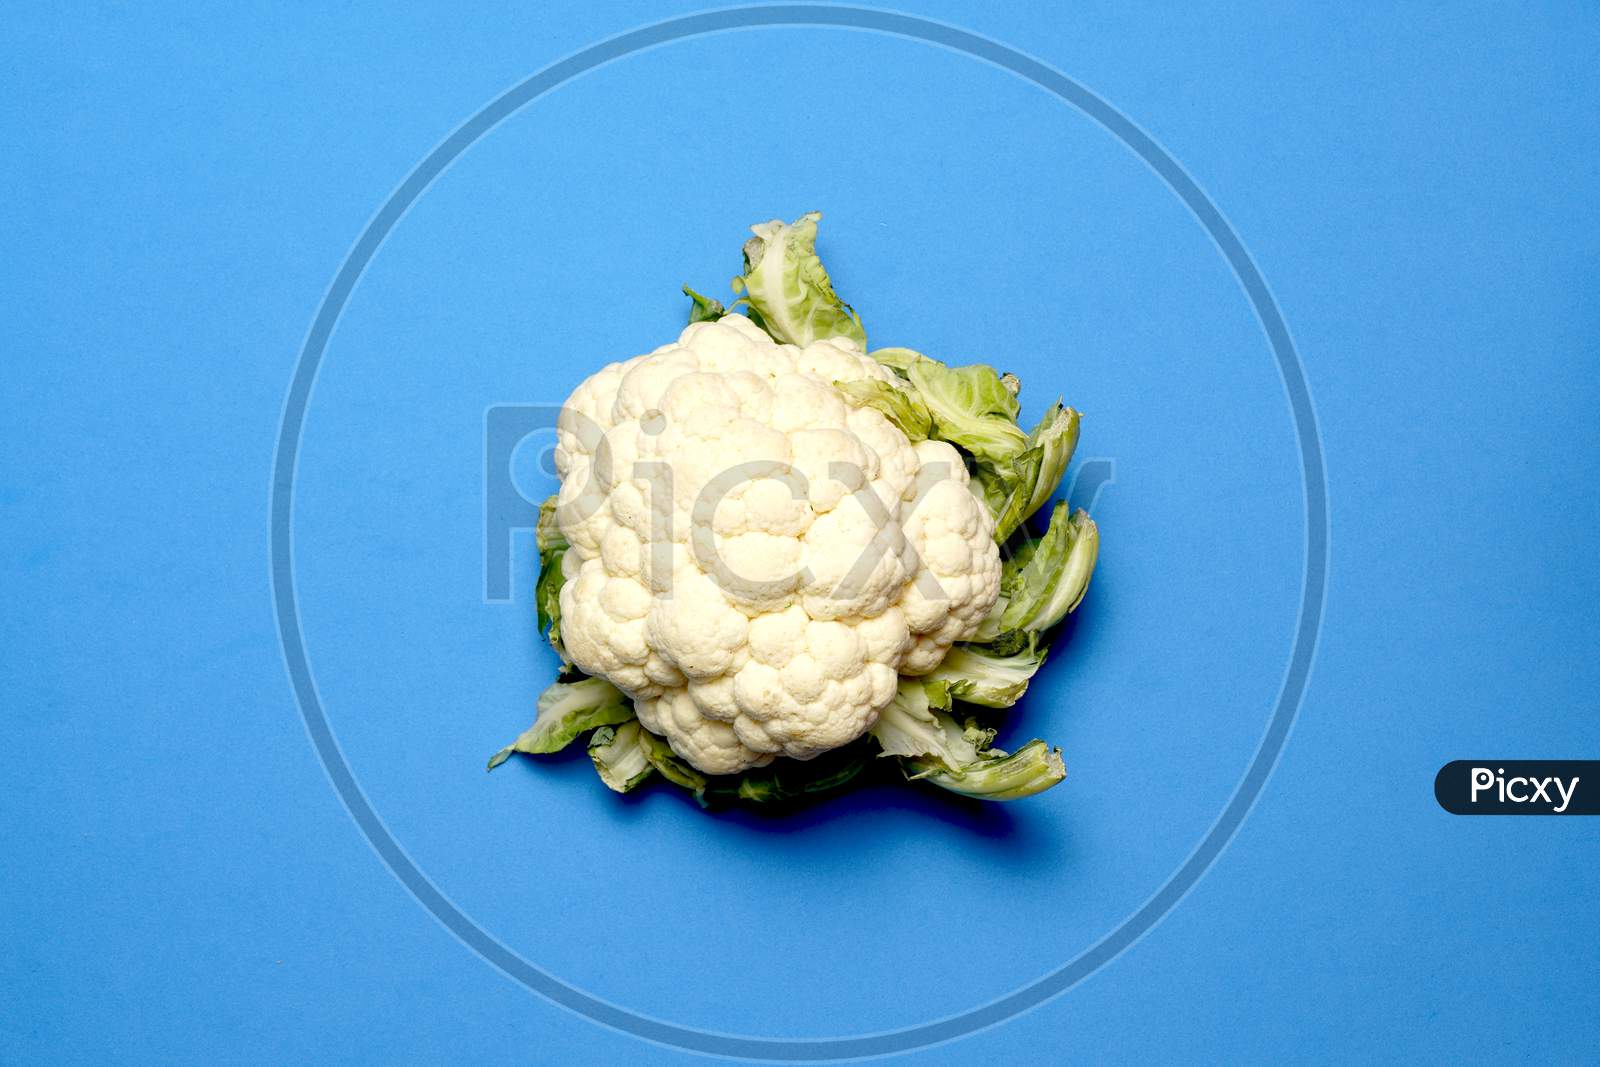 Cauliflower Top View On Blue Background. Vegetarian Or Vegan Concept. Flat Lay Flat Design